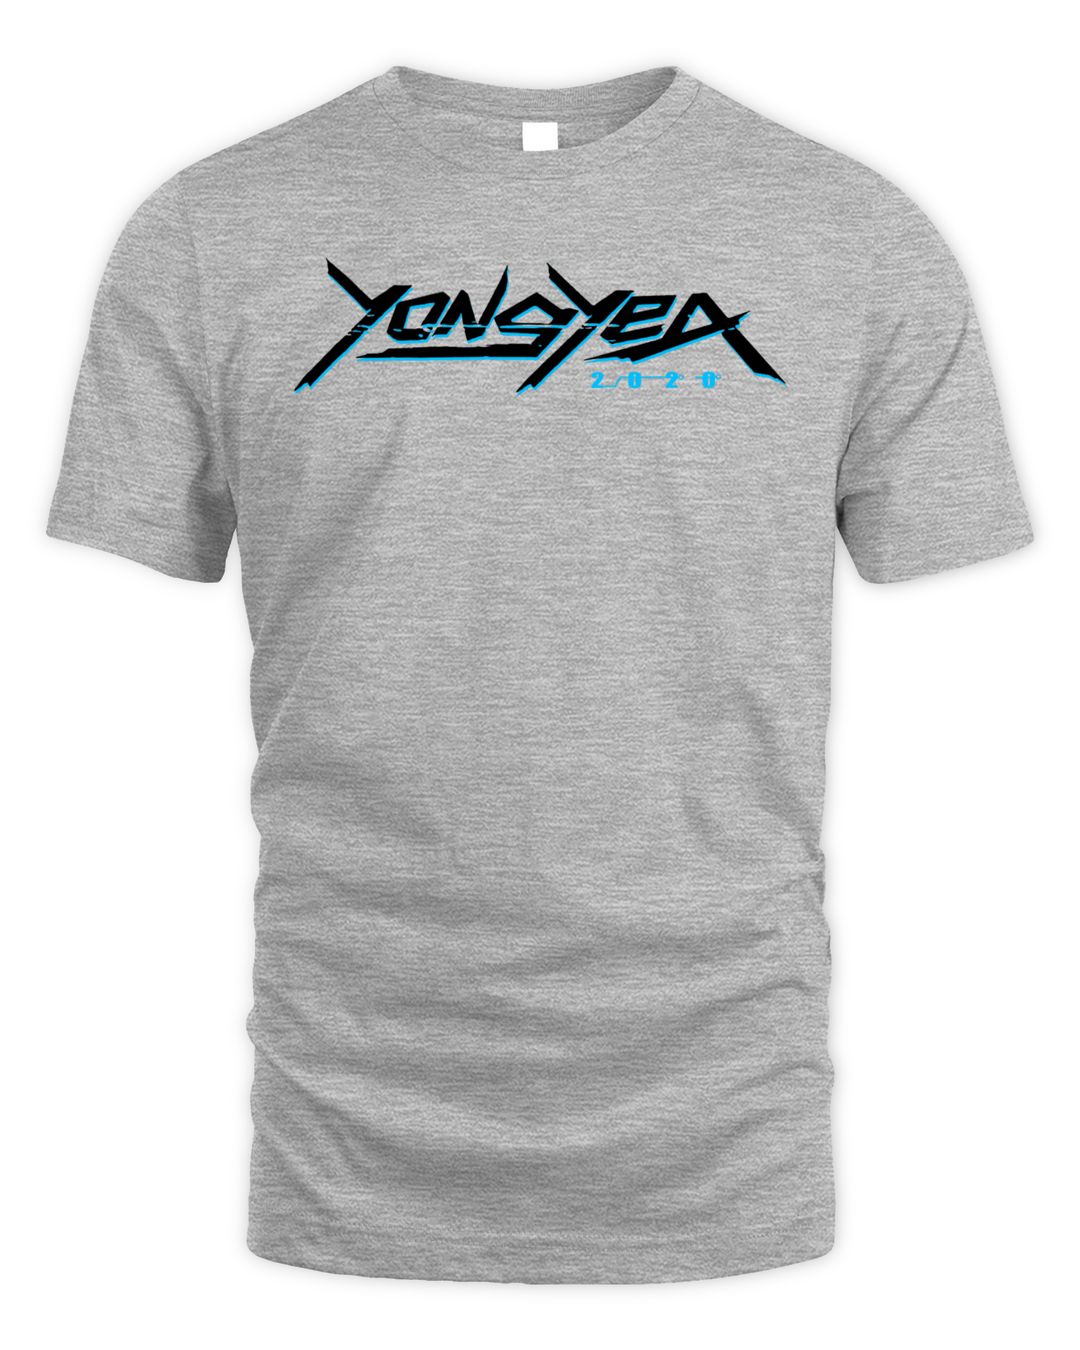 Yongyea Merch Cyber Shirt